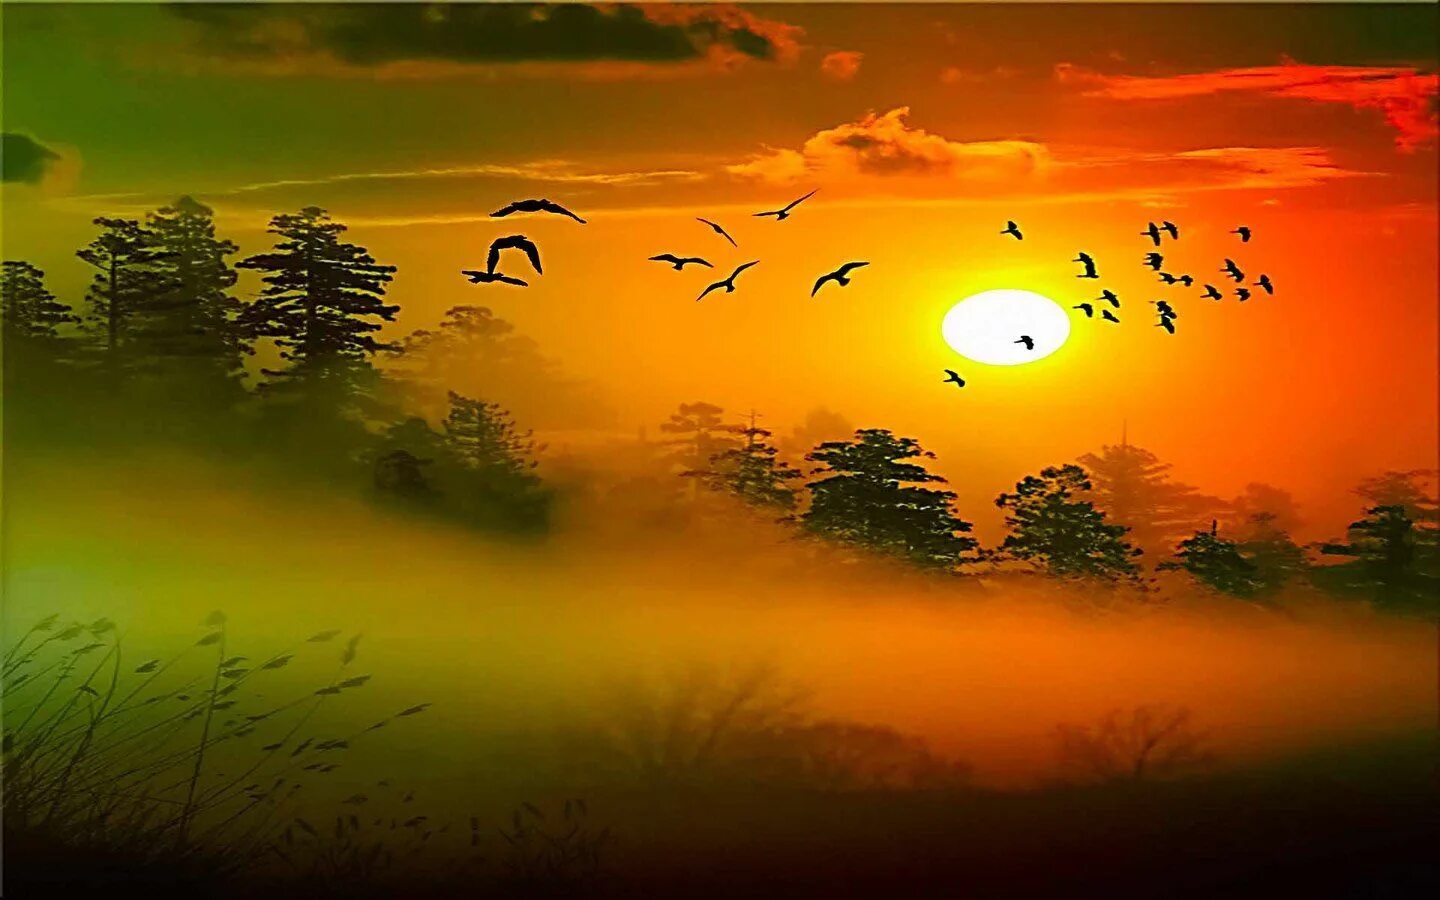 It is a beautiful evening. Утро солнце птицы. Утренний рассвет с птицами. Птица солнца. Солнце птички.